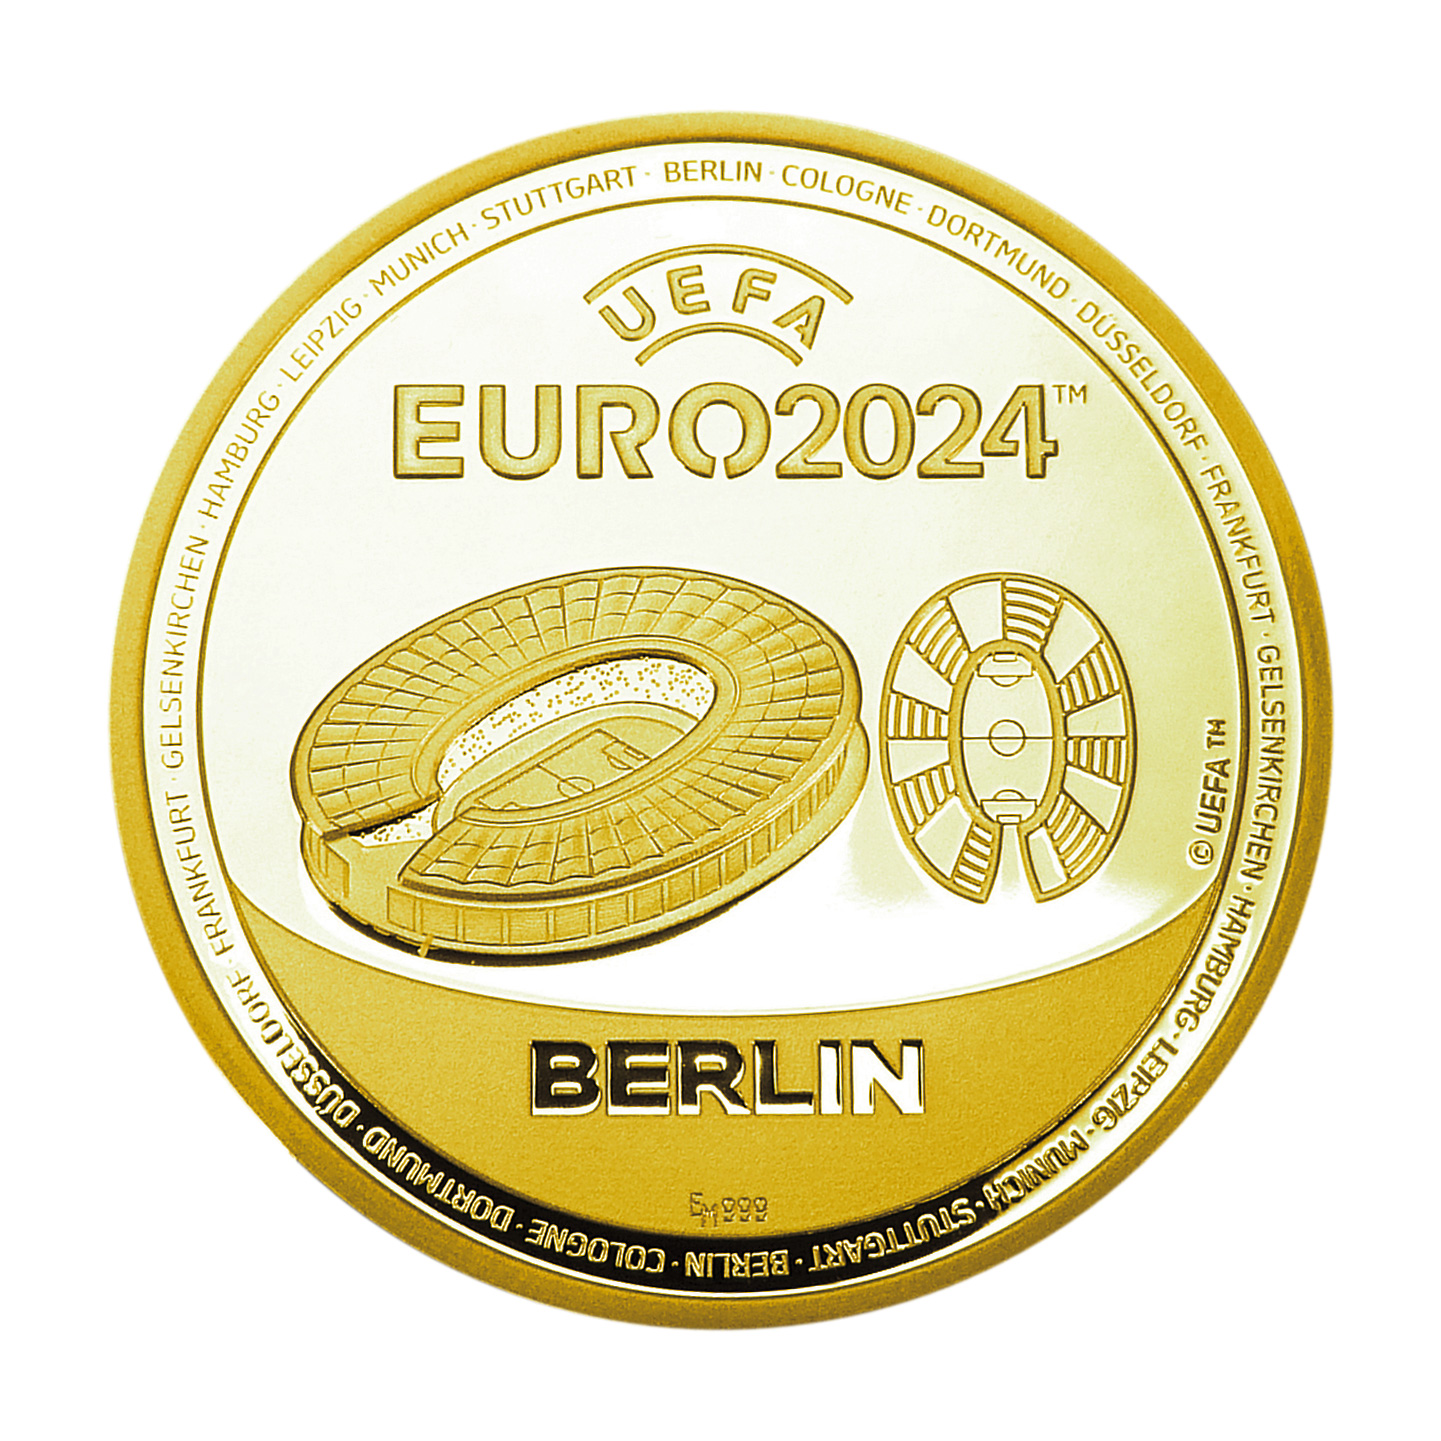 UEFA EURO 2024 Berlin - gold